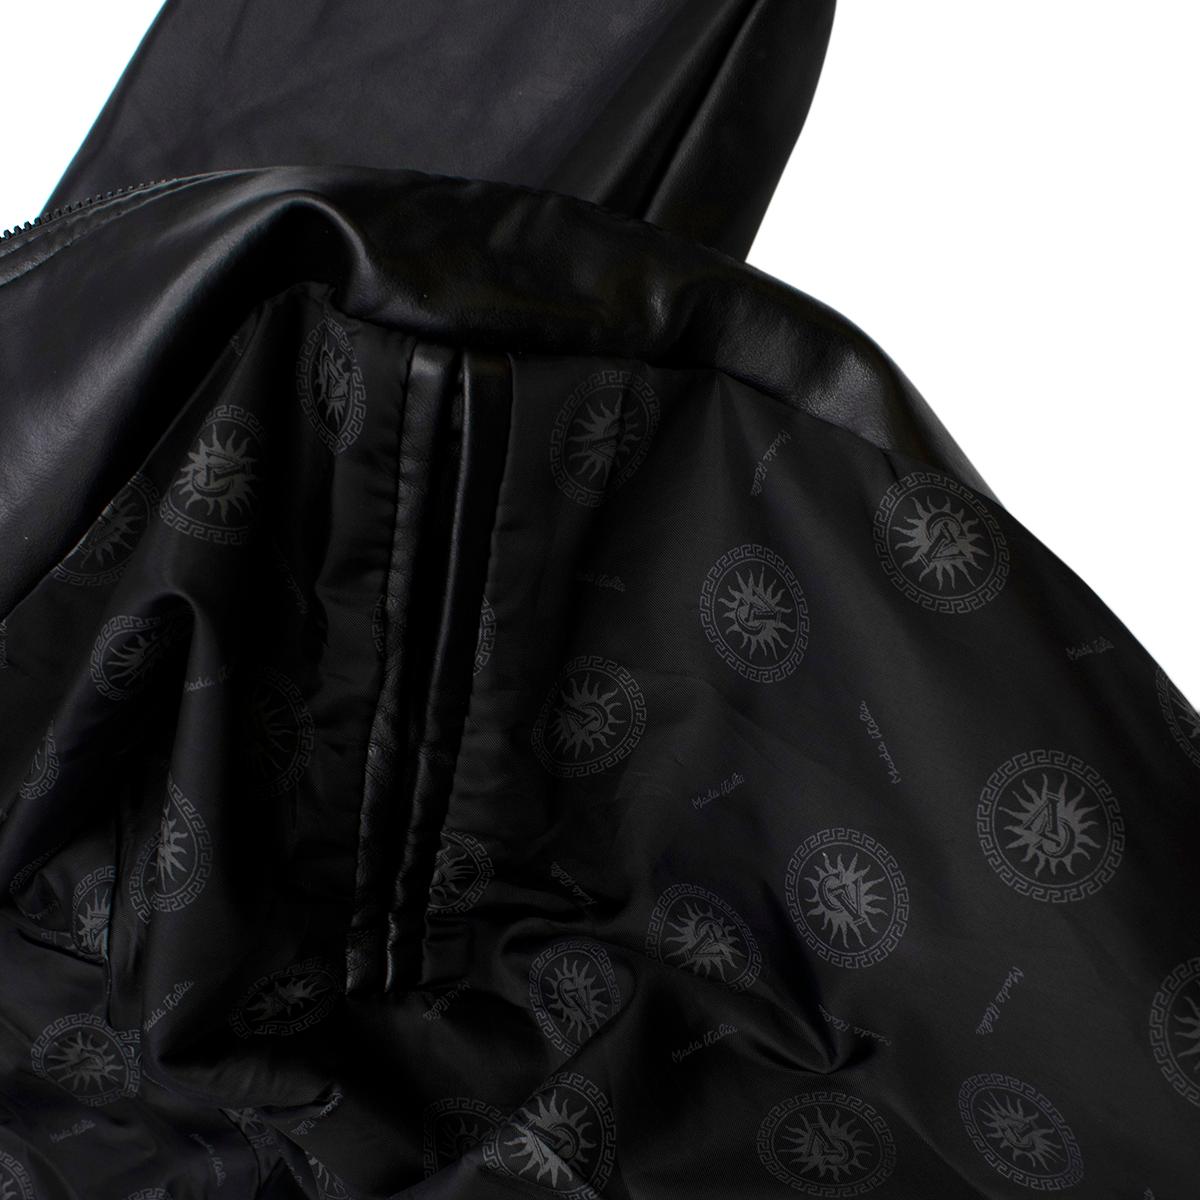 Gianni Versace Vintage Leather Biker Jacket - Us size 44 For Sale 1